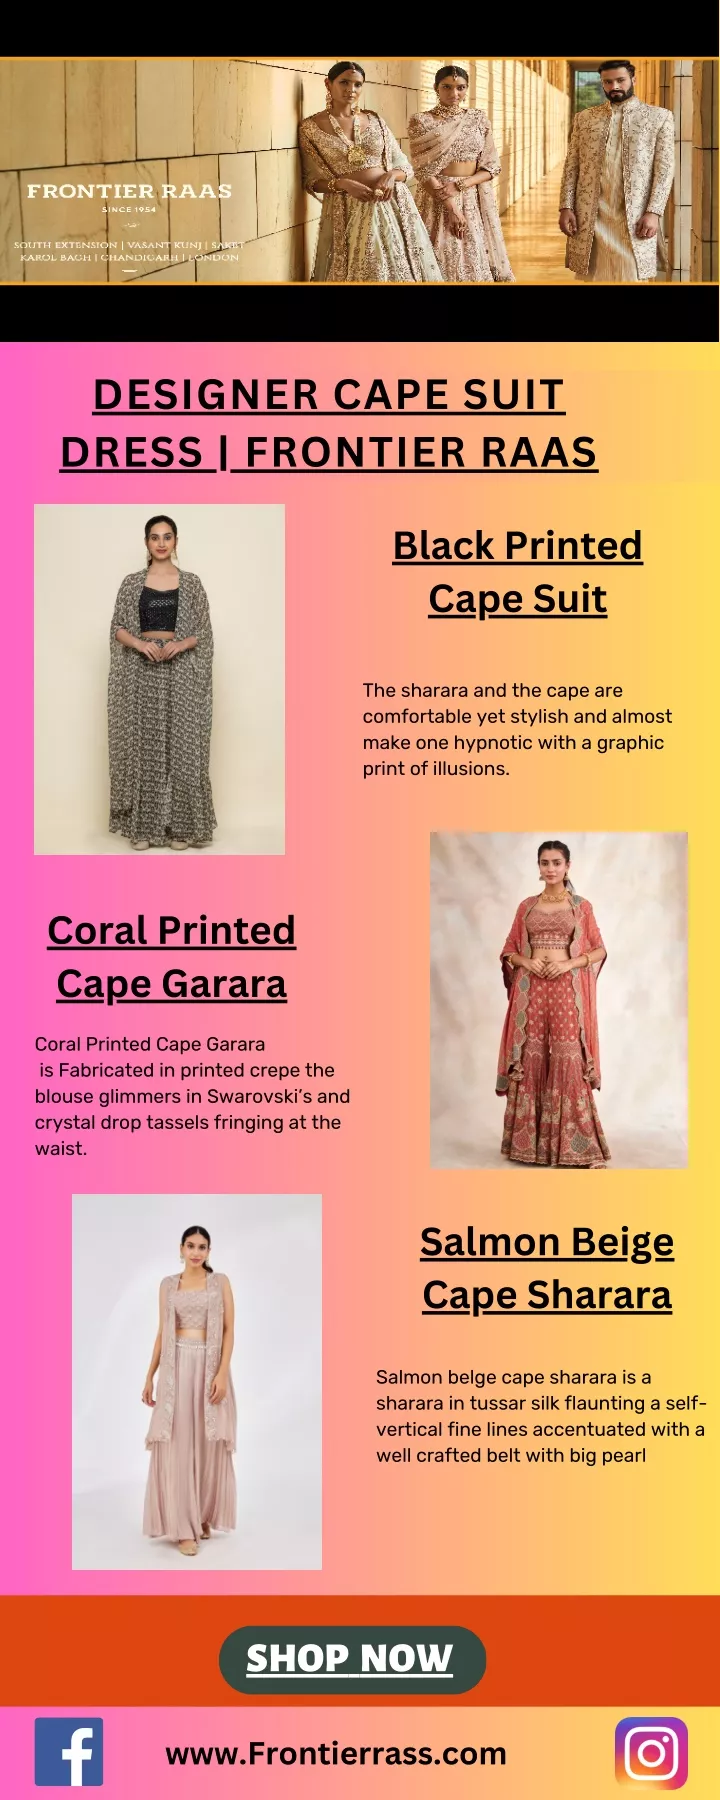 designer cape suit dress frontier raas